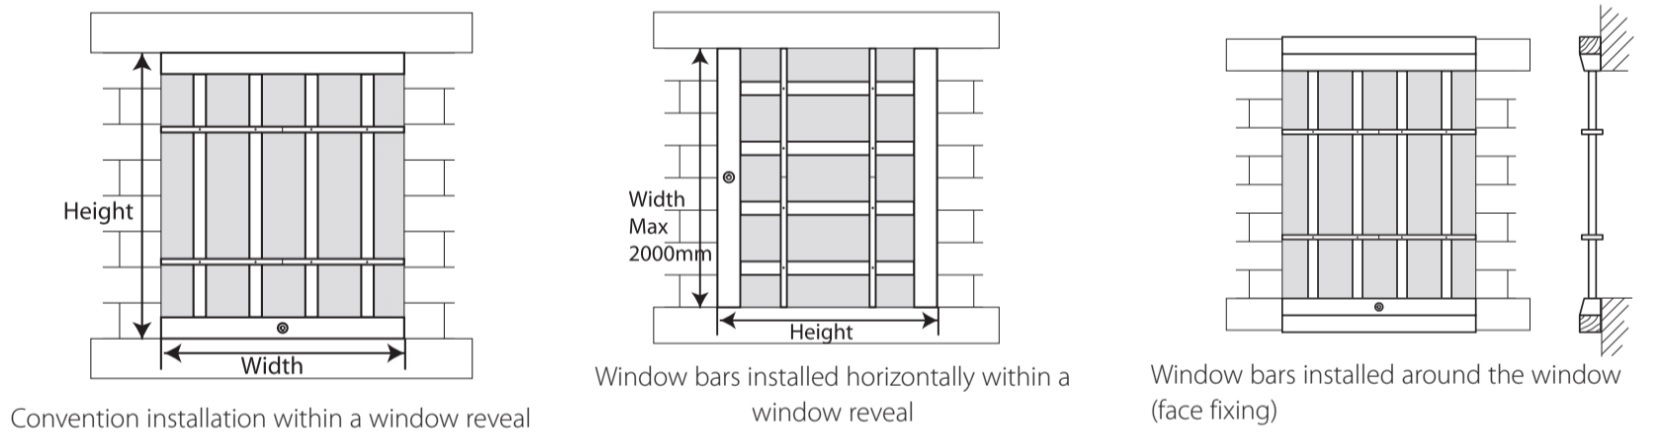 Window bar fitting arrangement diagram